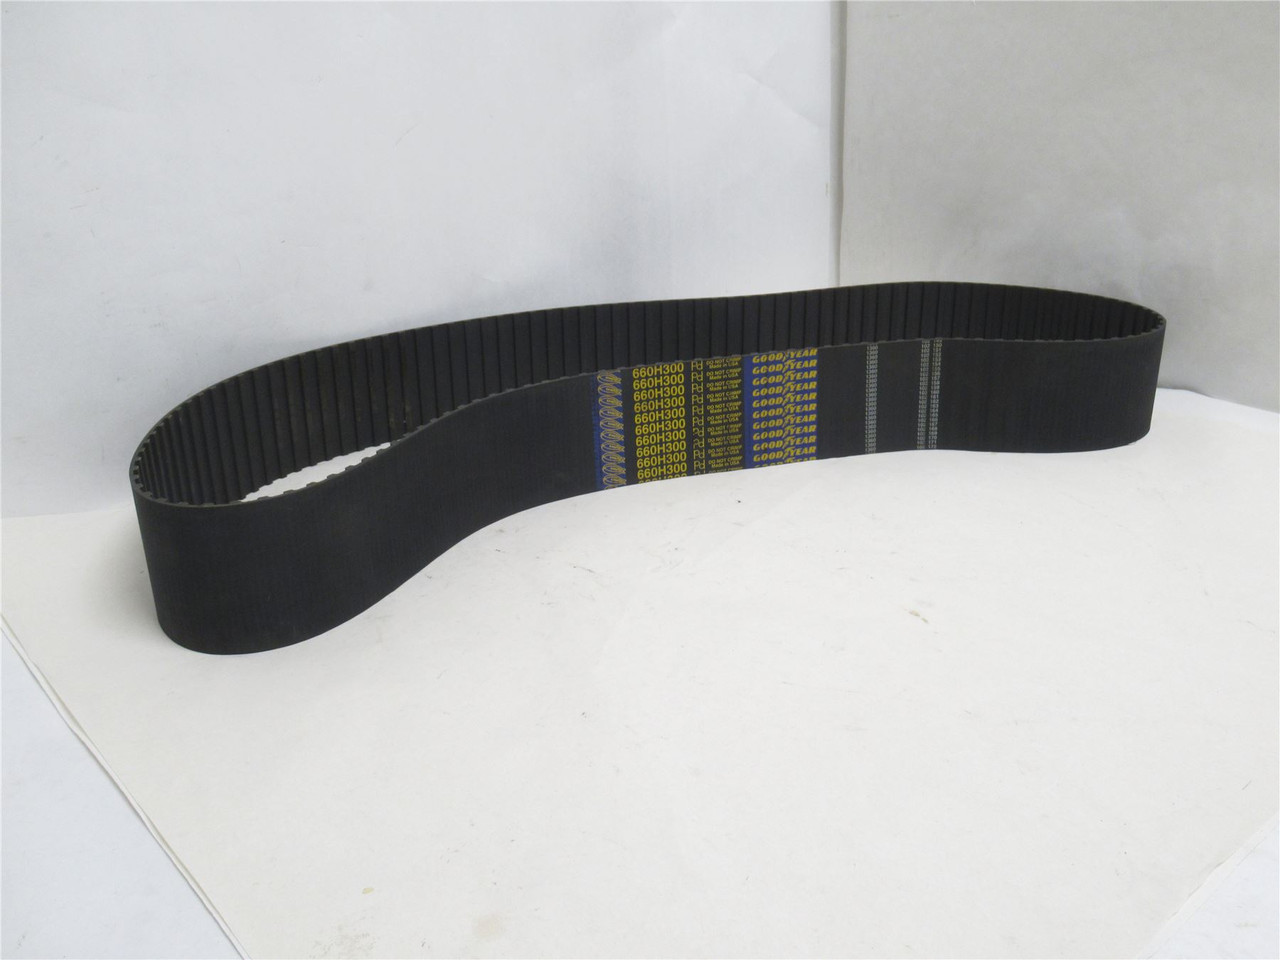 Goodyear 660H300; Timing Gear Belt; 66" Long x 3" Wide